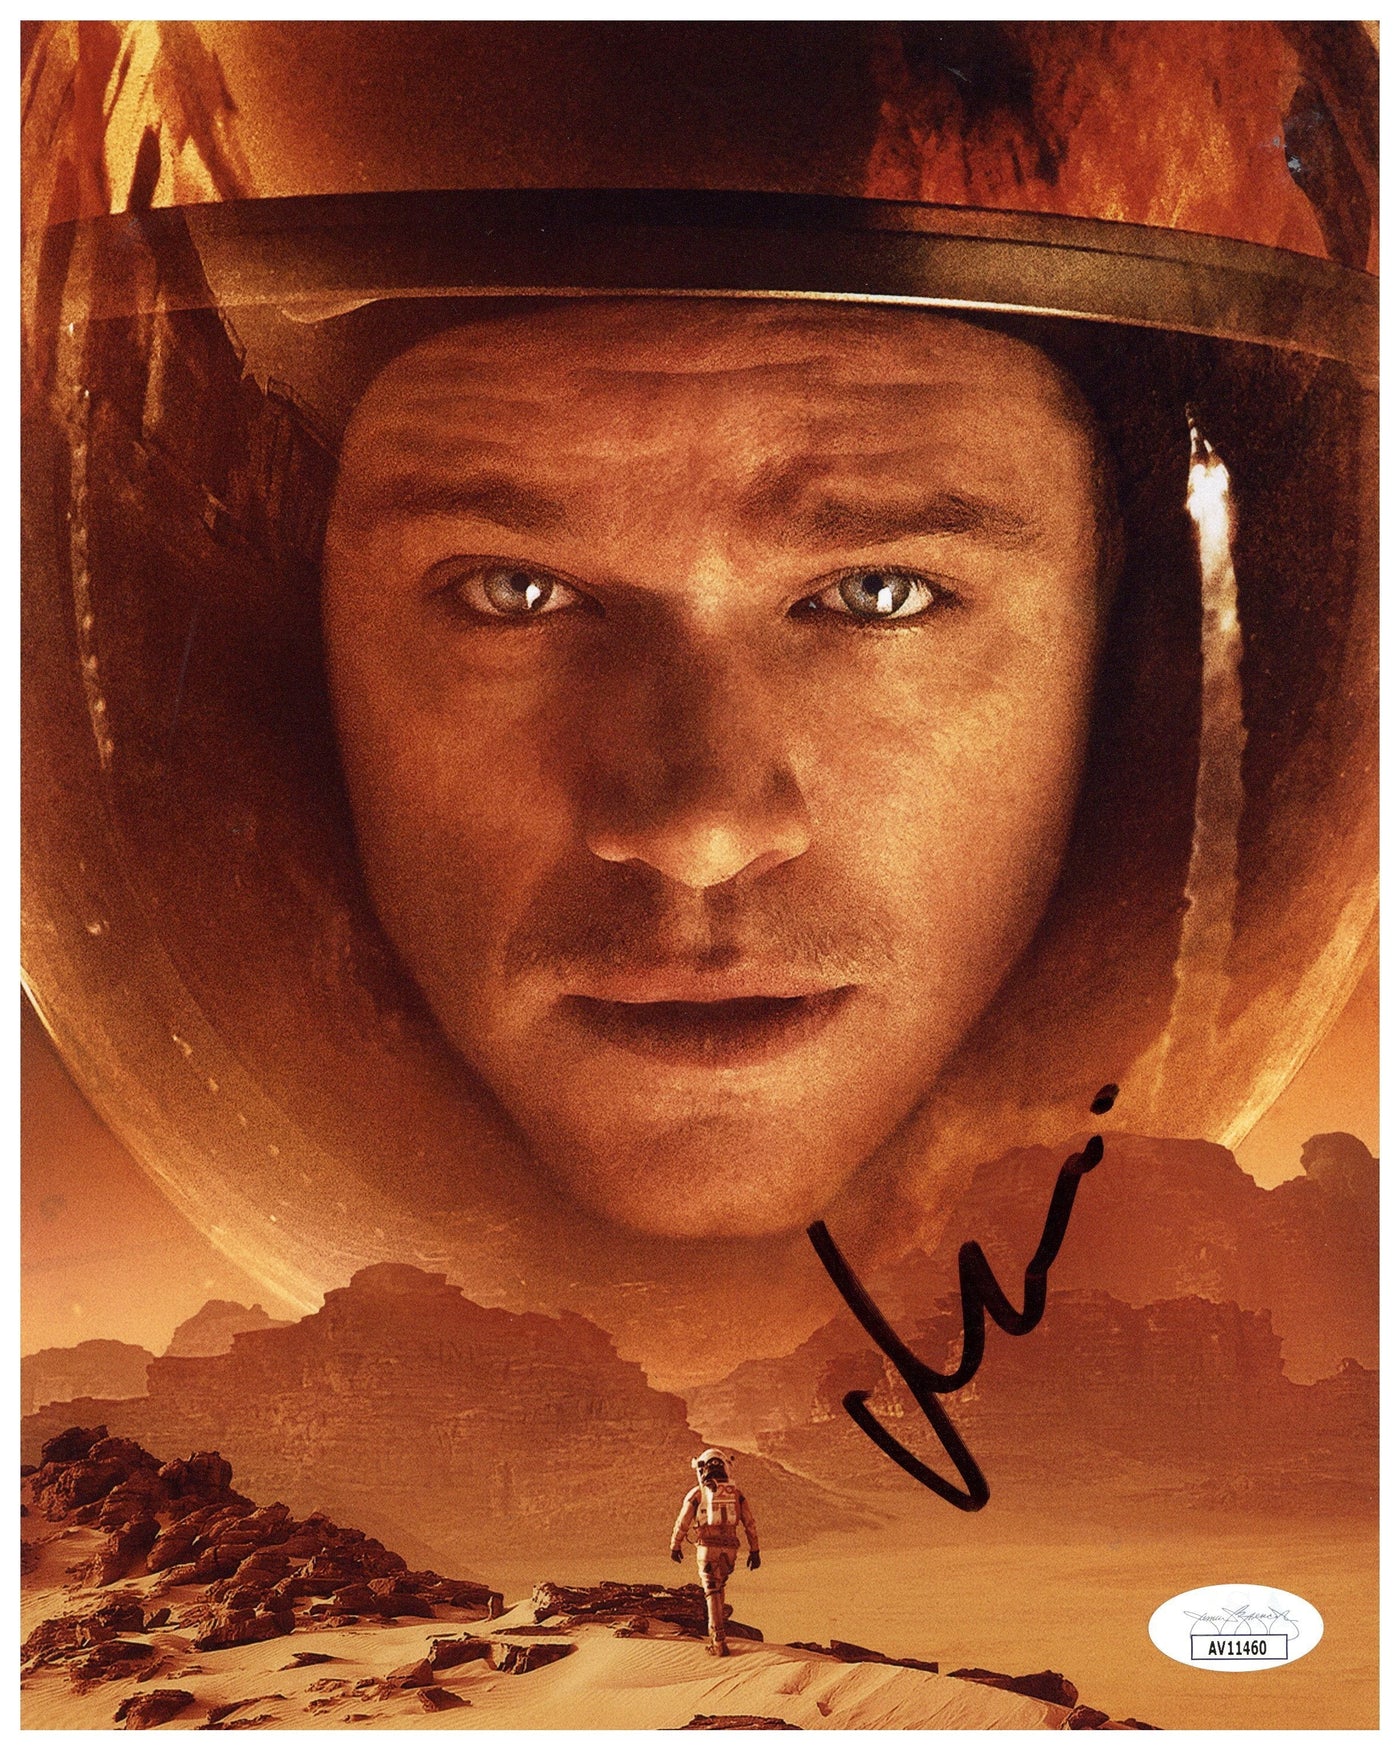 Matt Damon Signed 8x10 Photo The Martian Autographed Authentic JSA COA